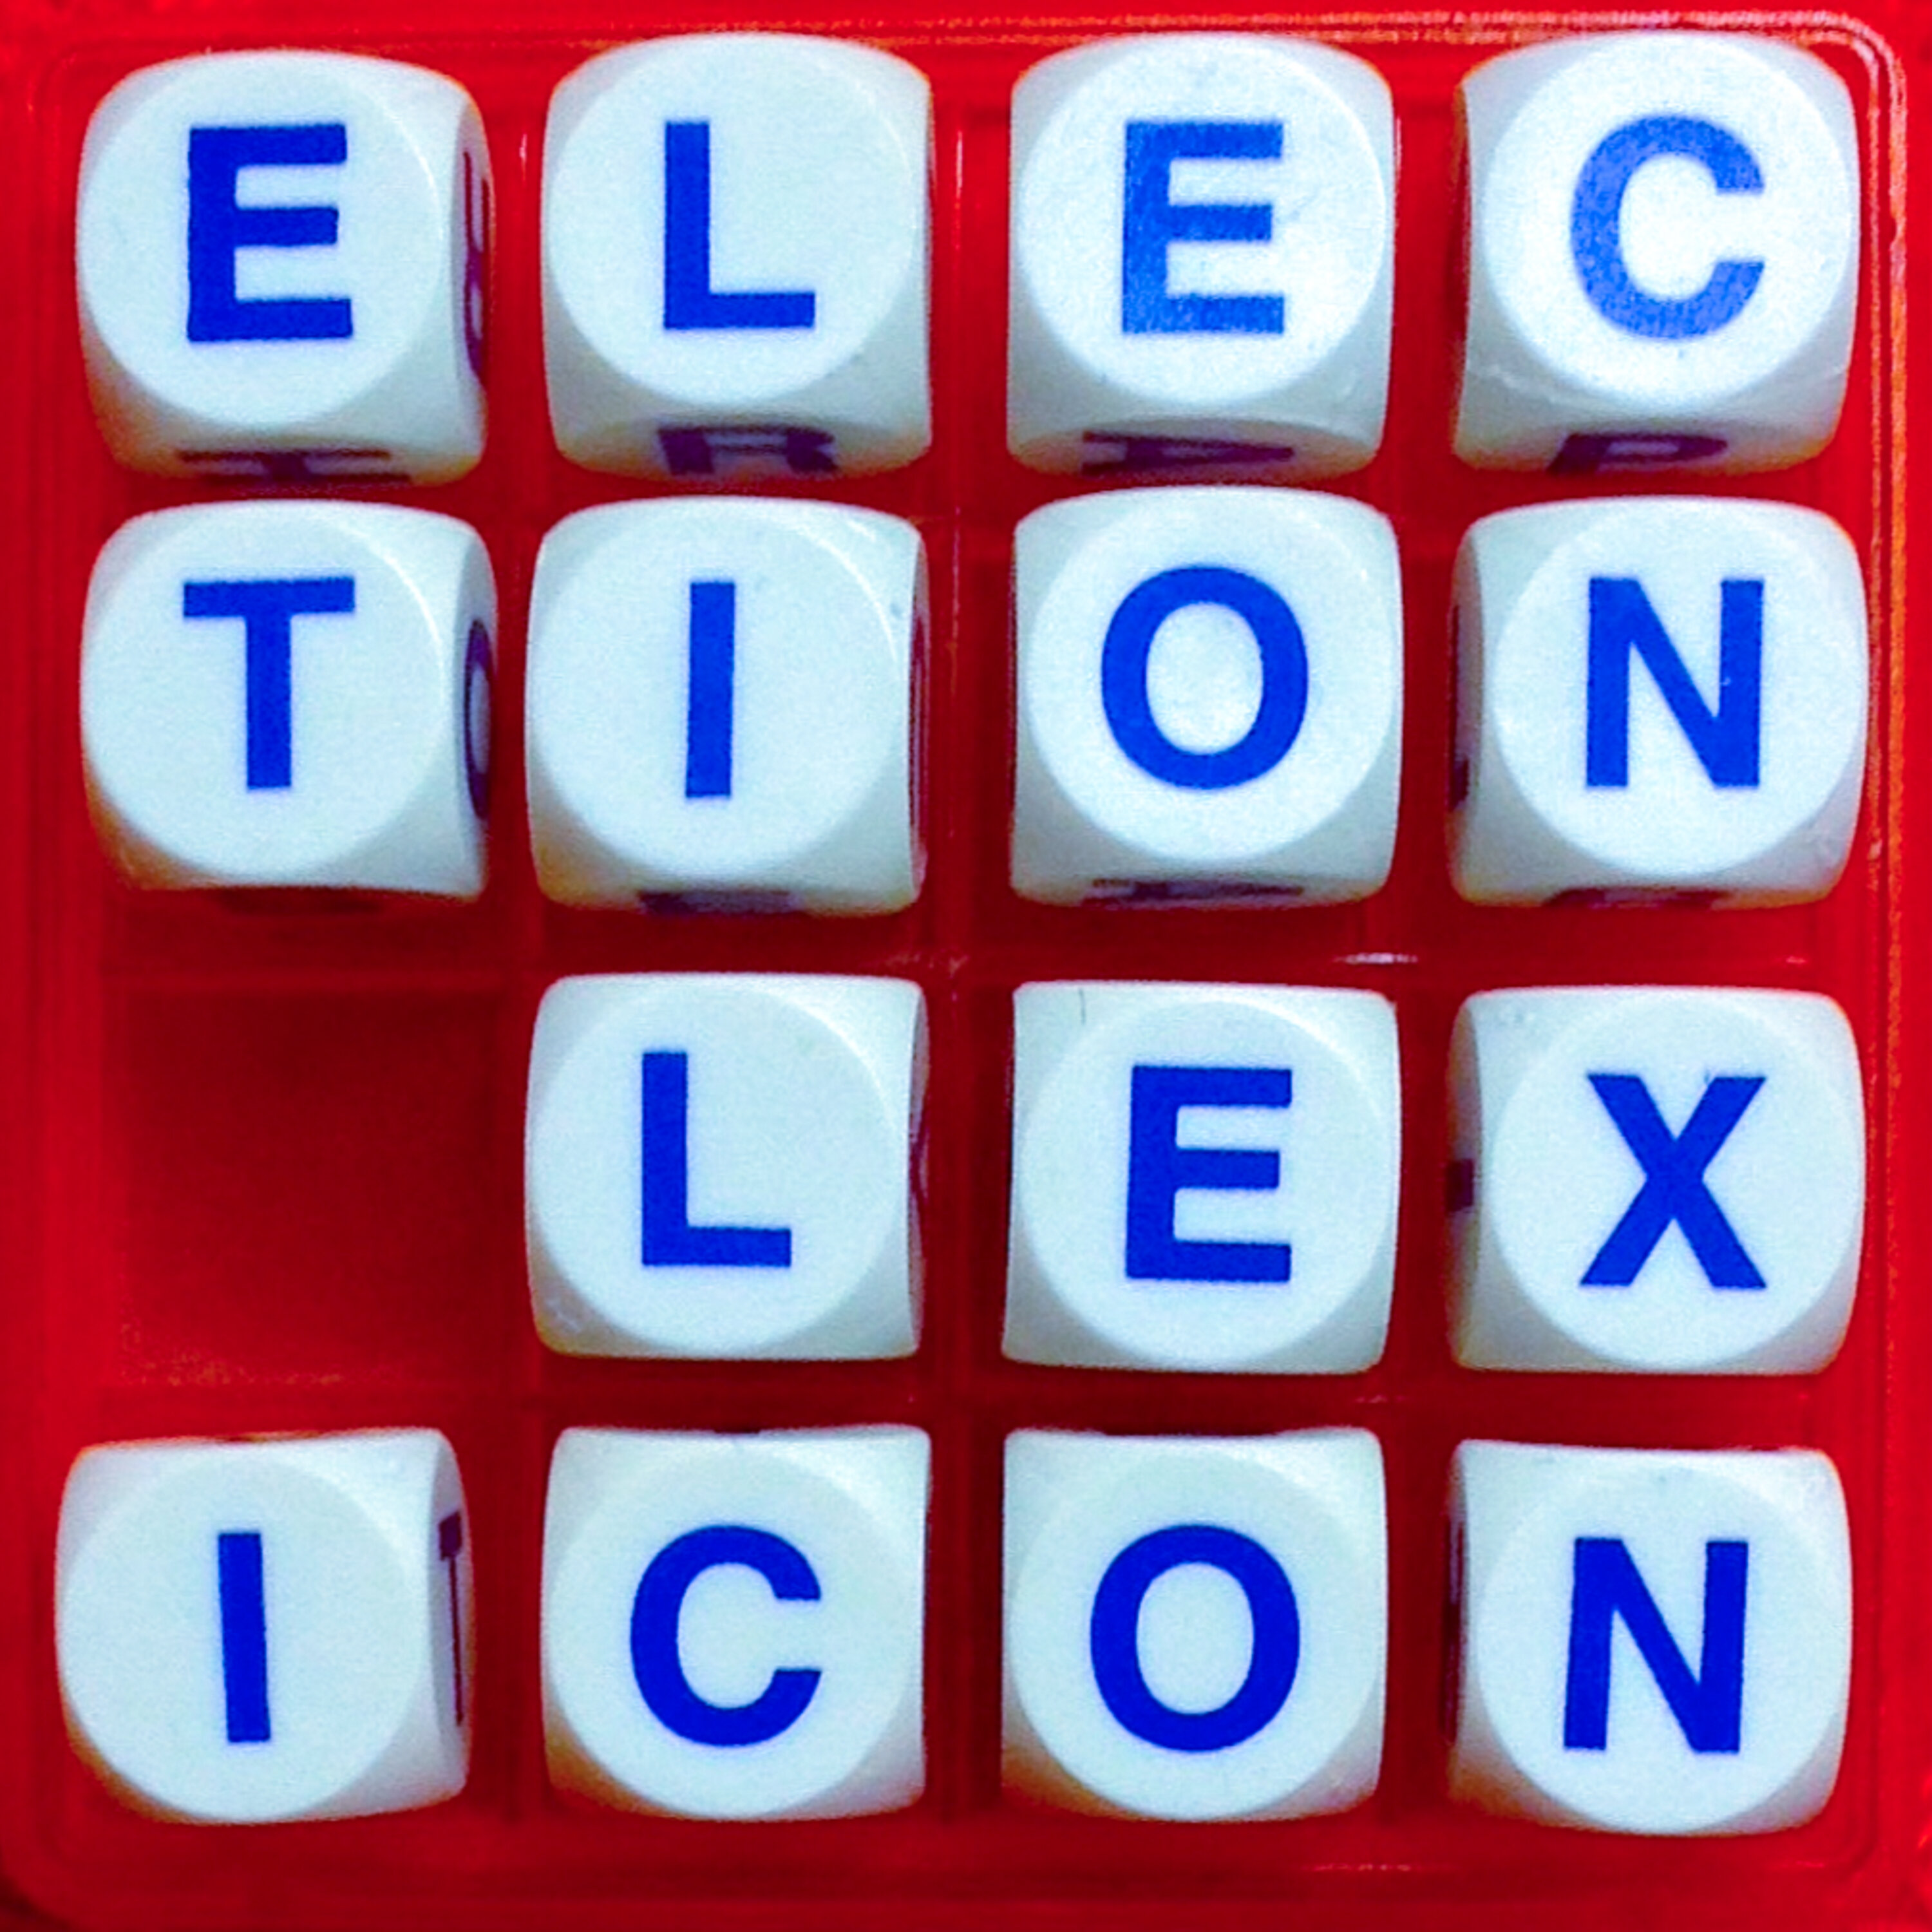 Thumbnail for "10. Election Lexicon".